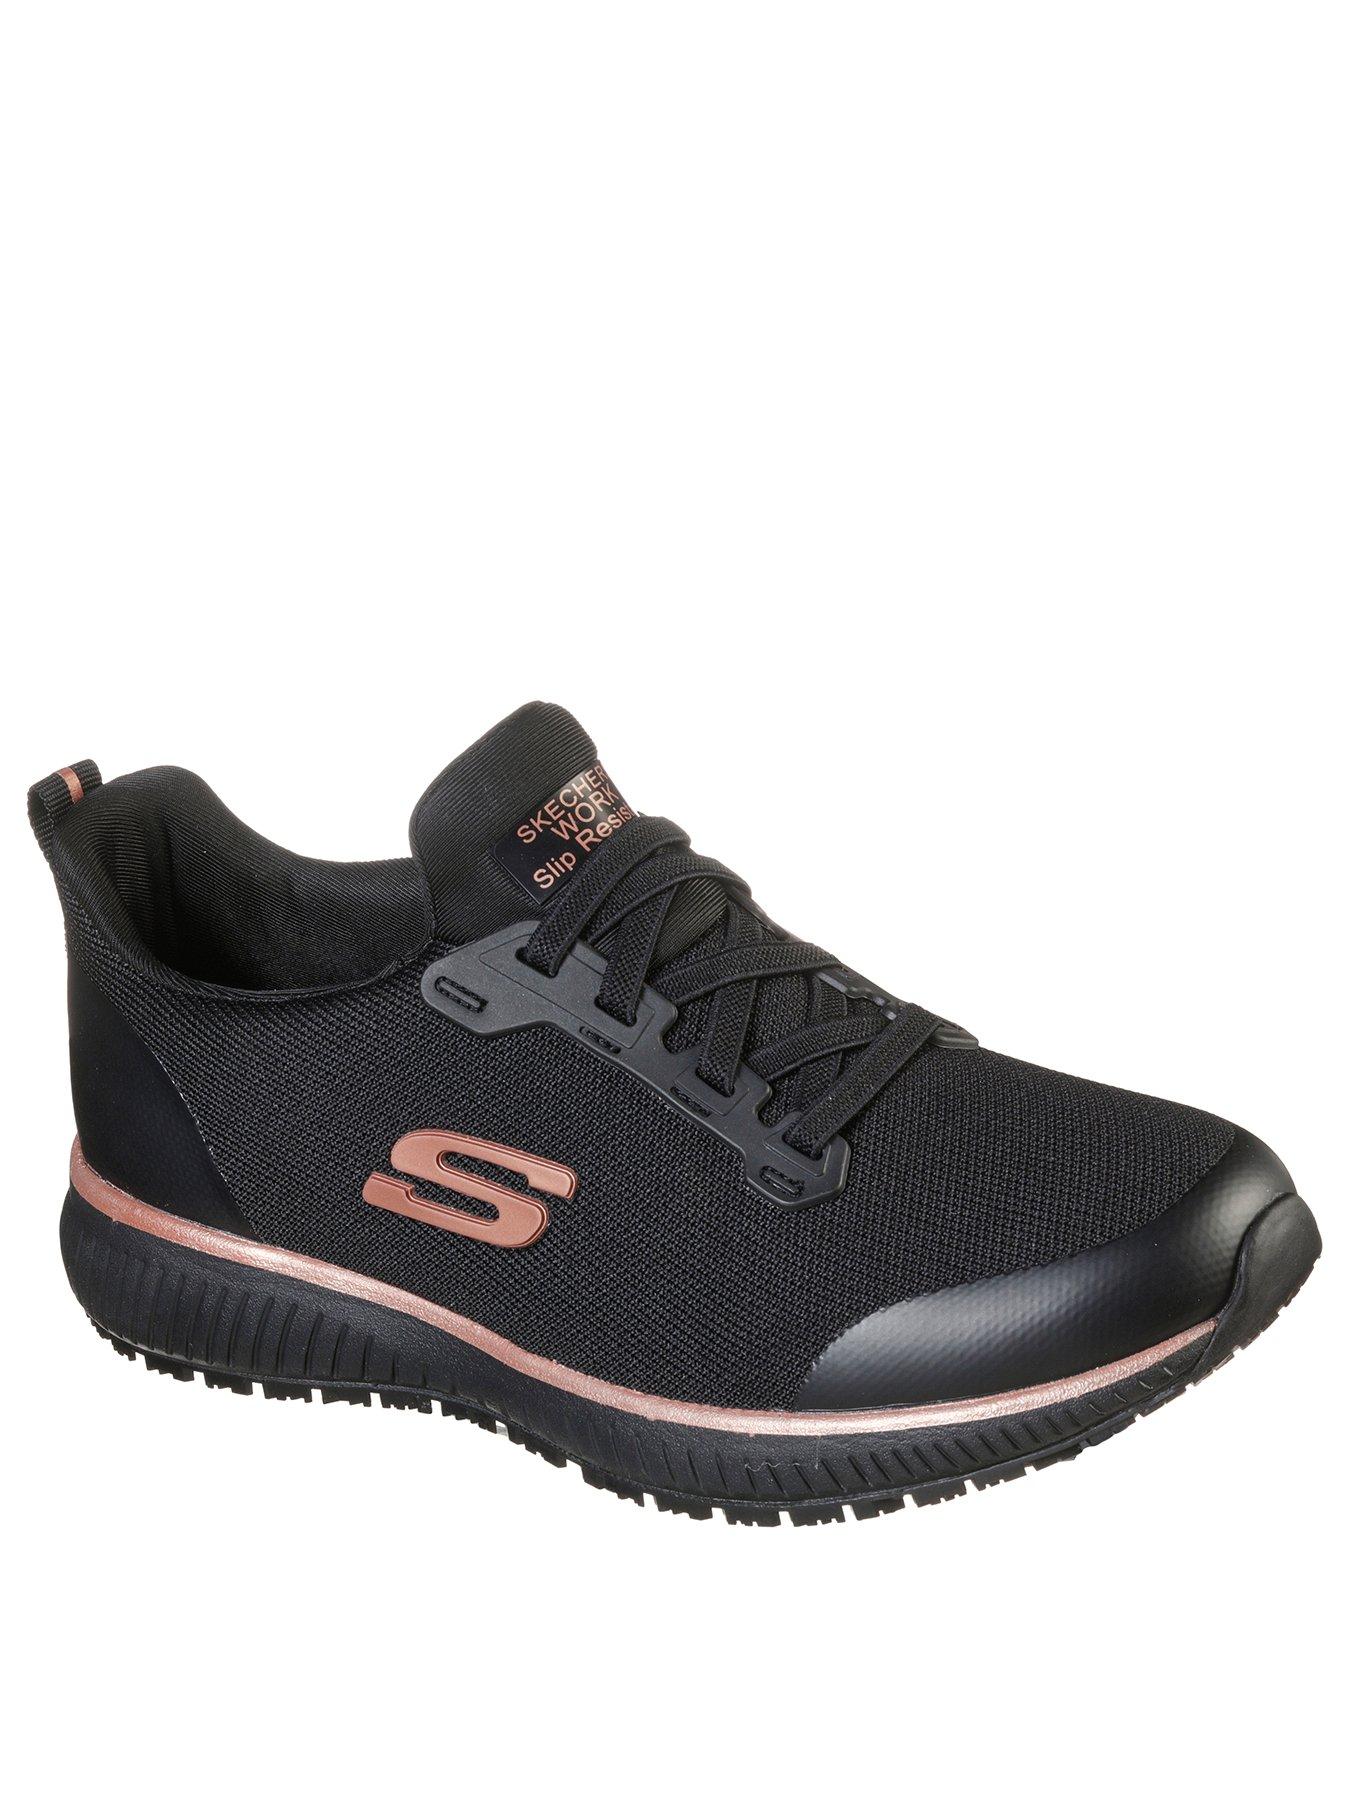 Skechers Shoes | Skechers Very.co.uk